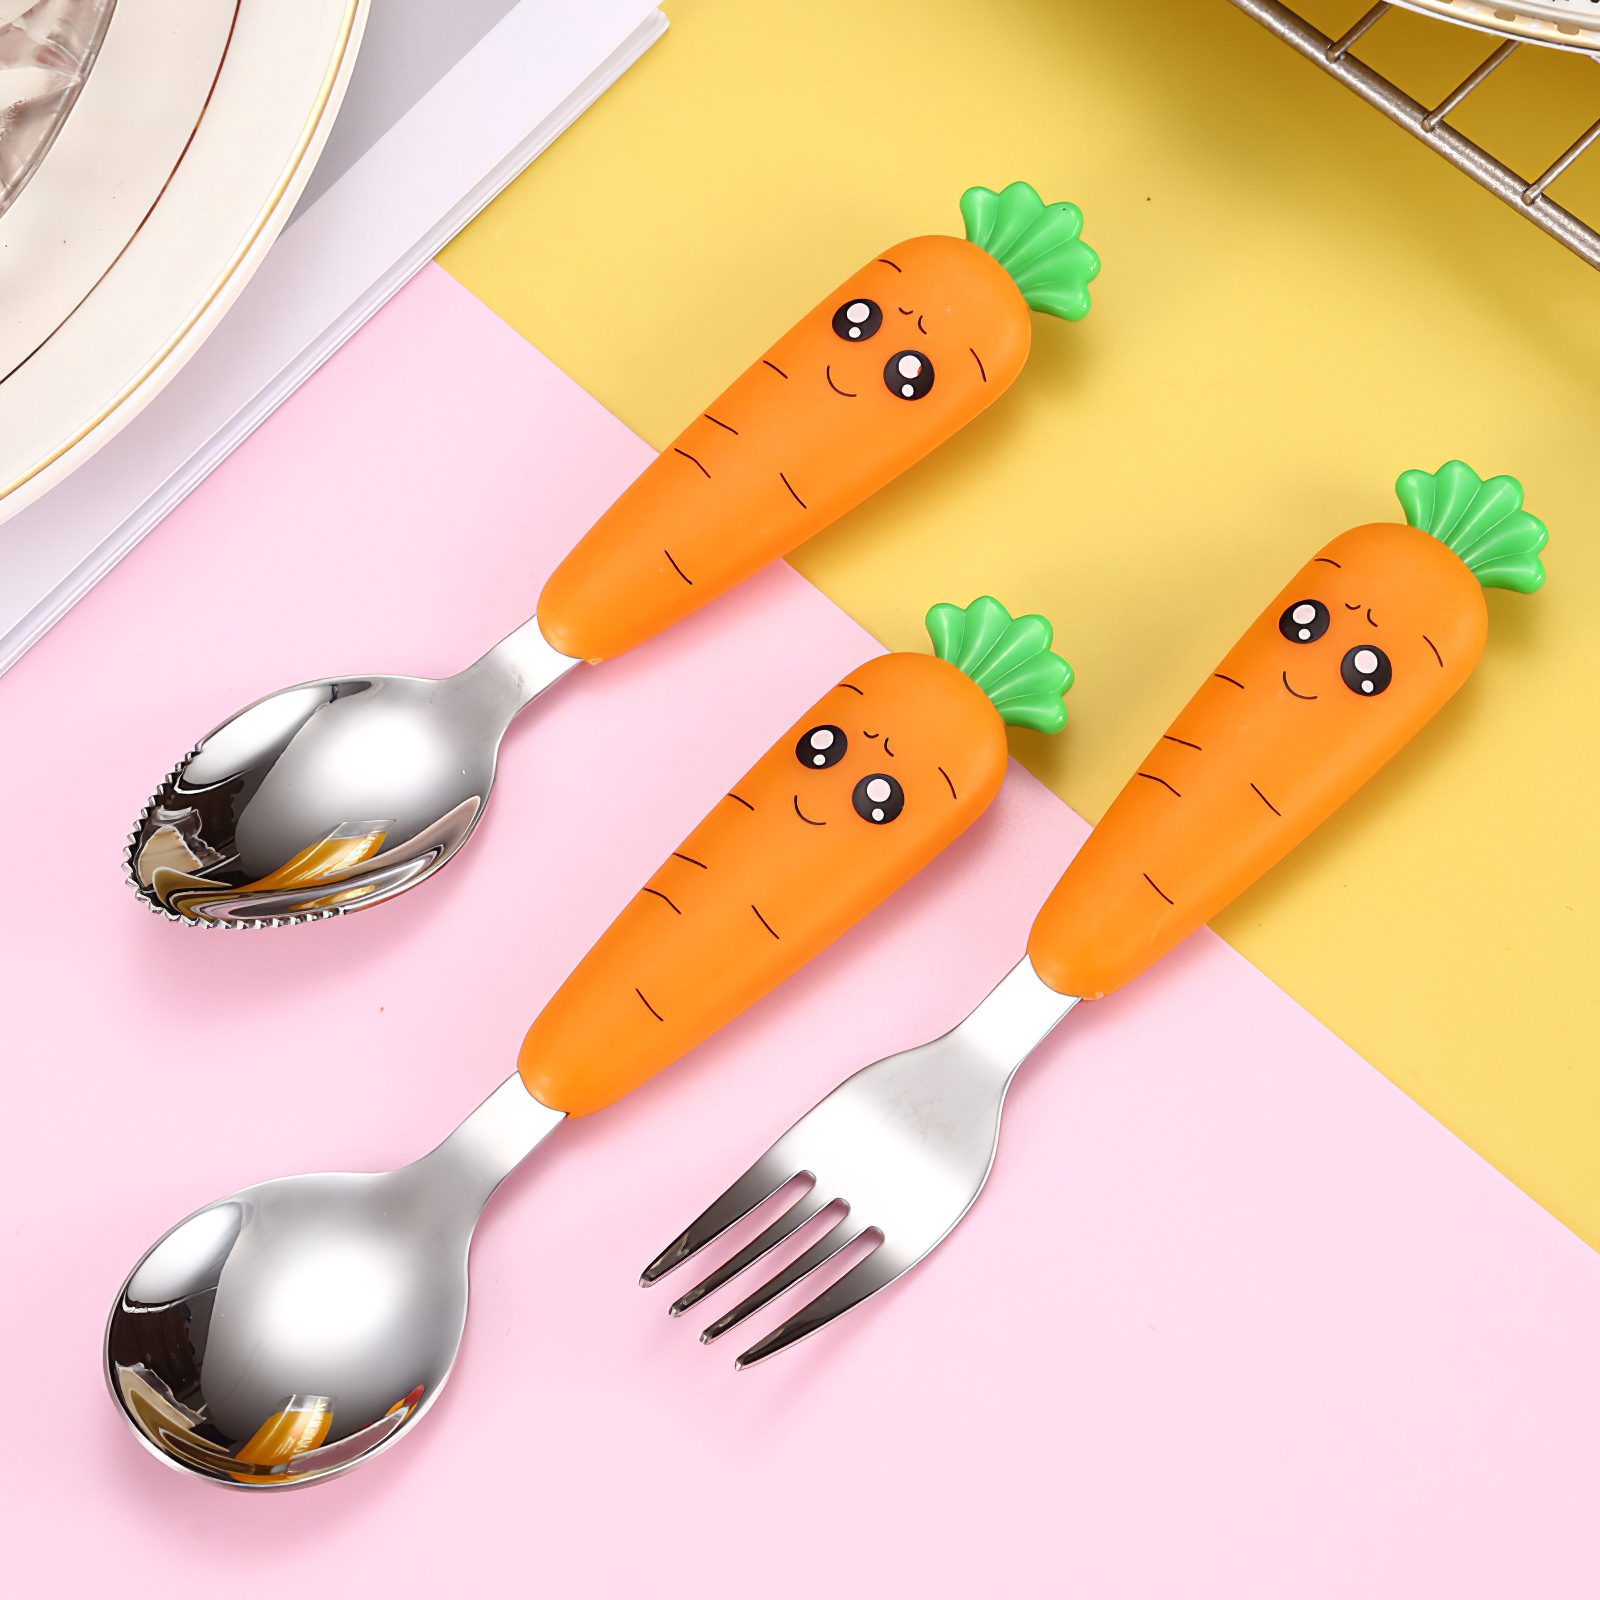 Cute Cartoon Spoon Fork Set 304 Stainless Steel Infant Feeding Children's  Tableware Baby Utensil Cutlery Set Dinnerware PINK MOUSE